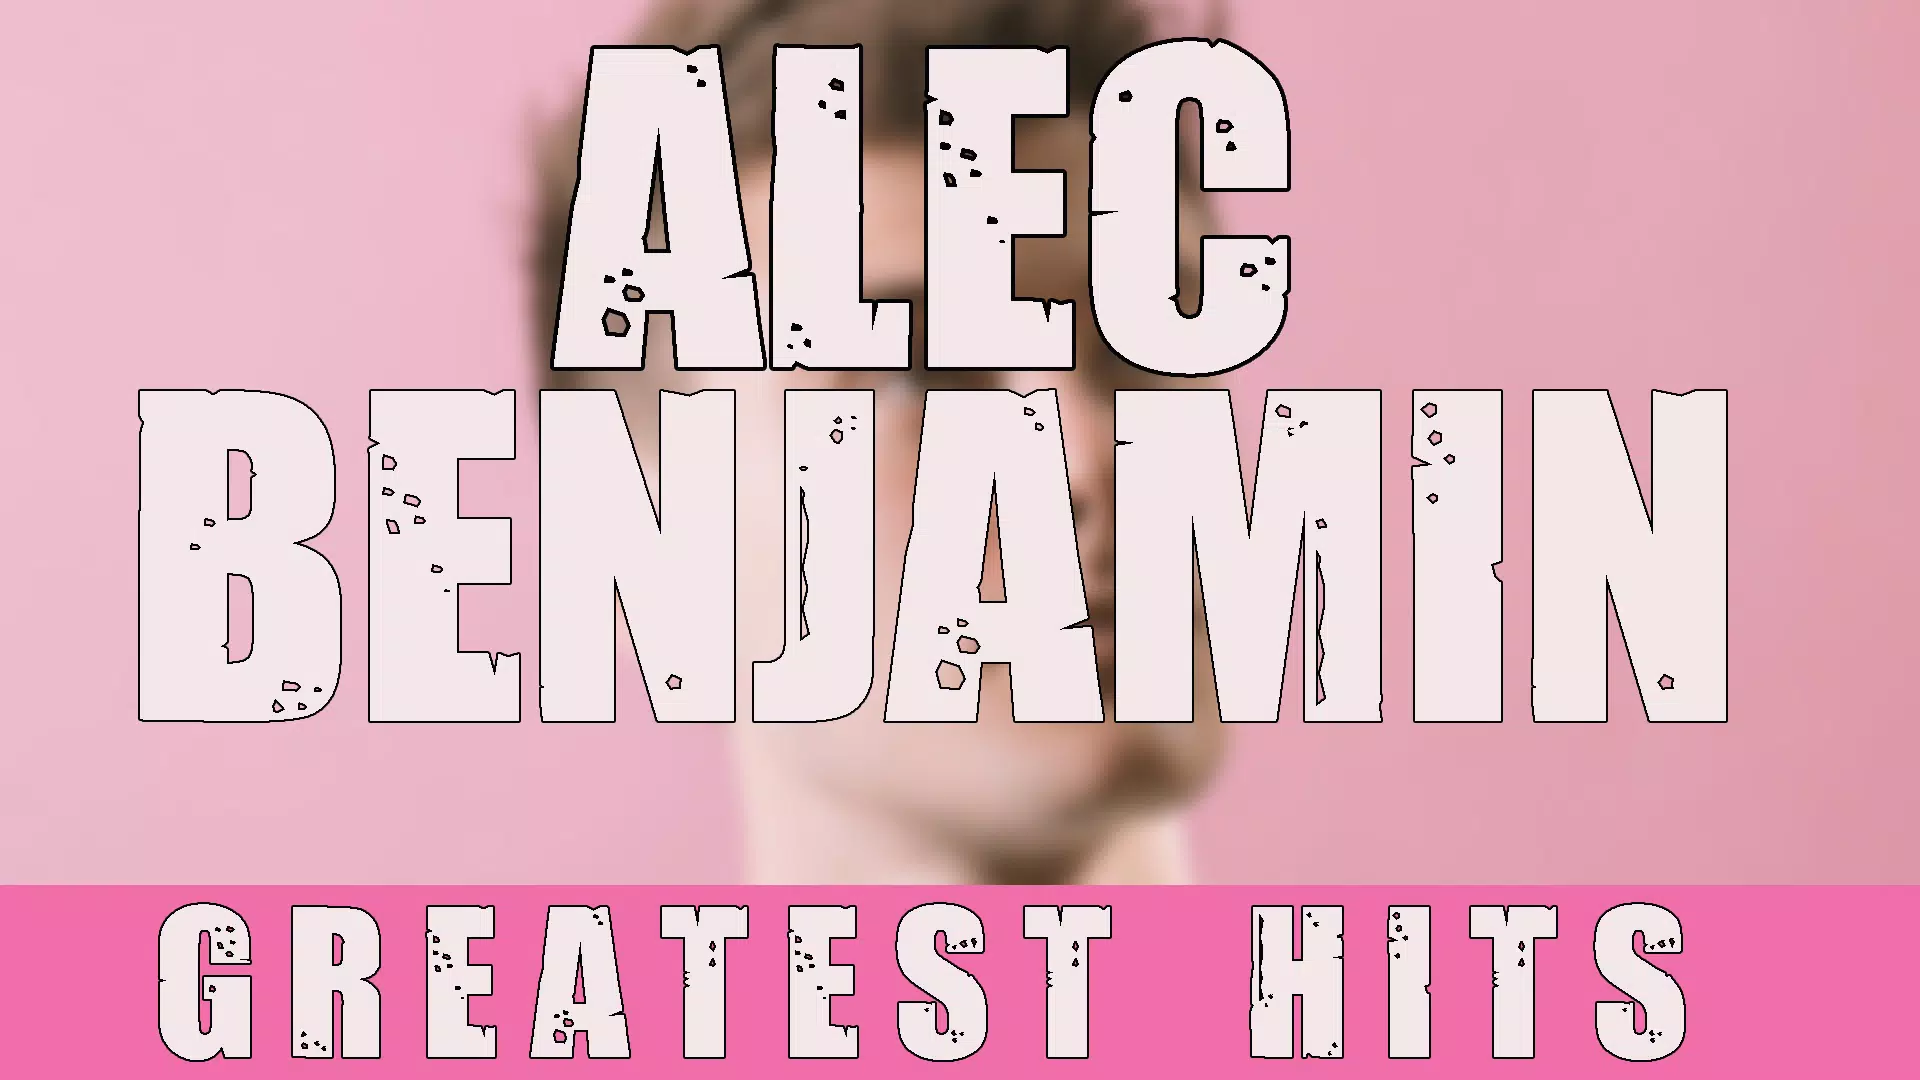 Alec Benjamin Songs APK for Android Download